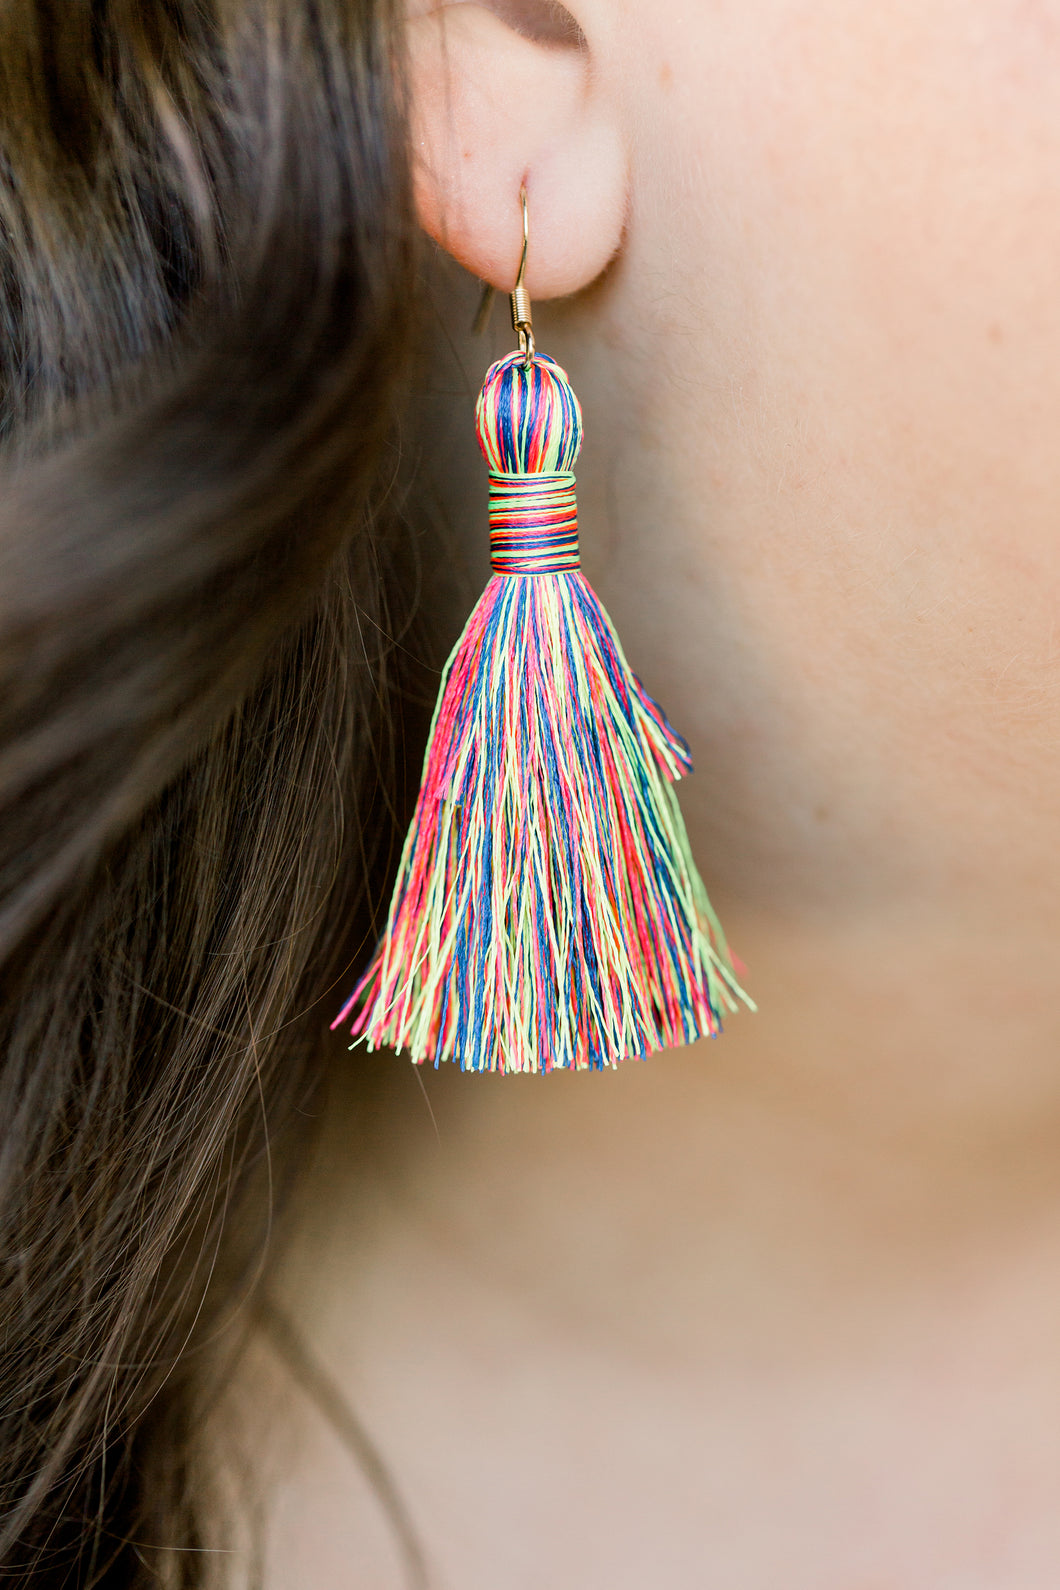 THE DAWN 2” NEON RAINBOW silky tassel earrings